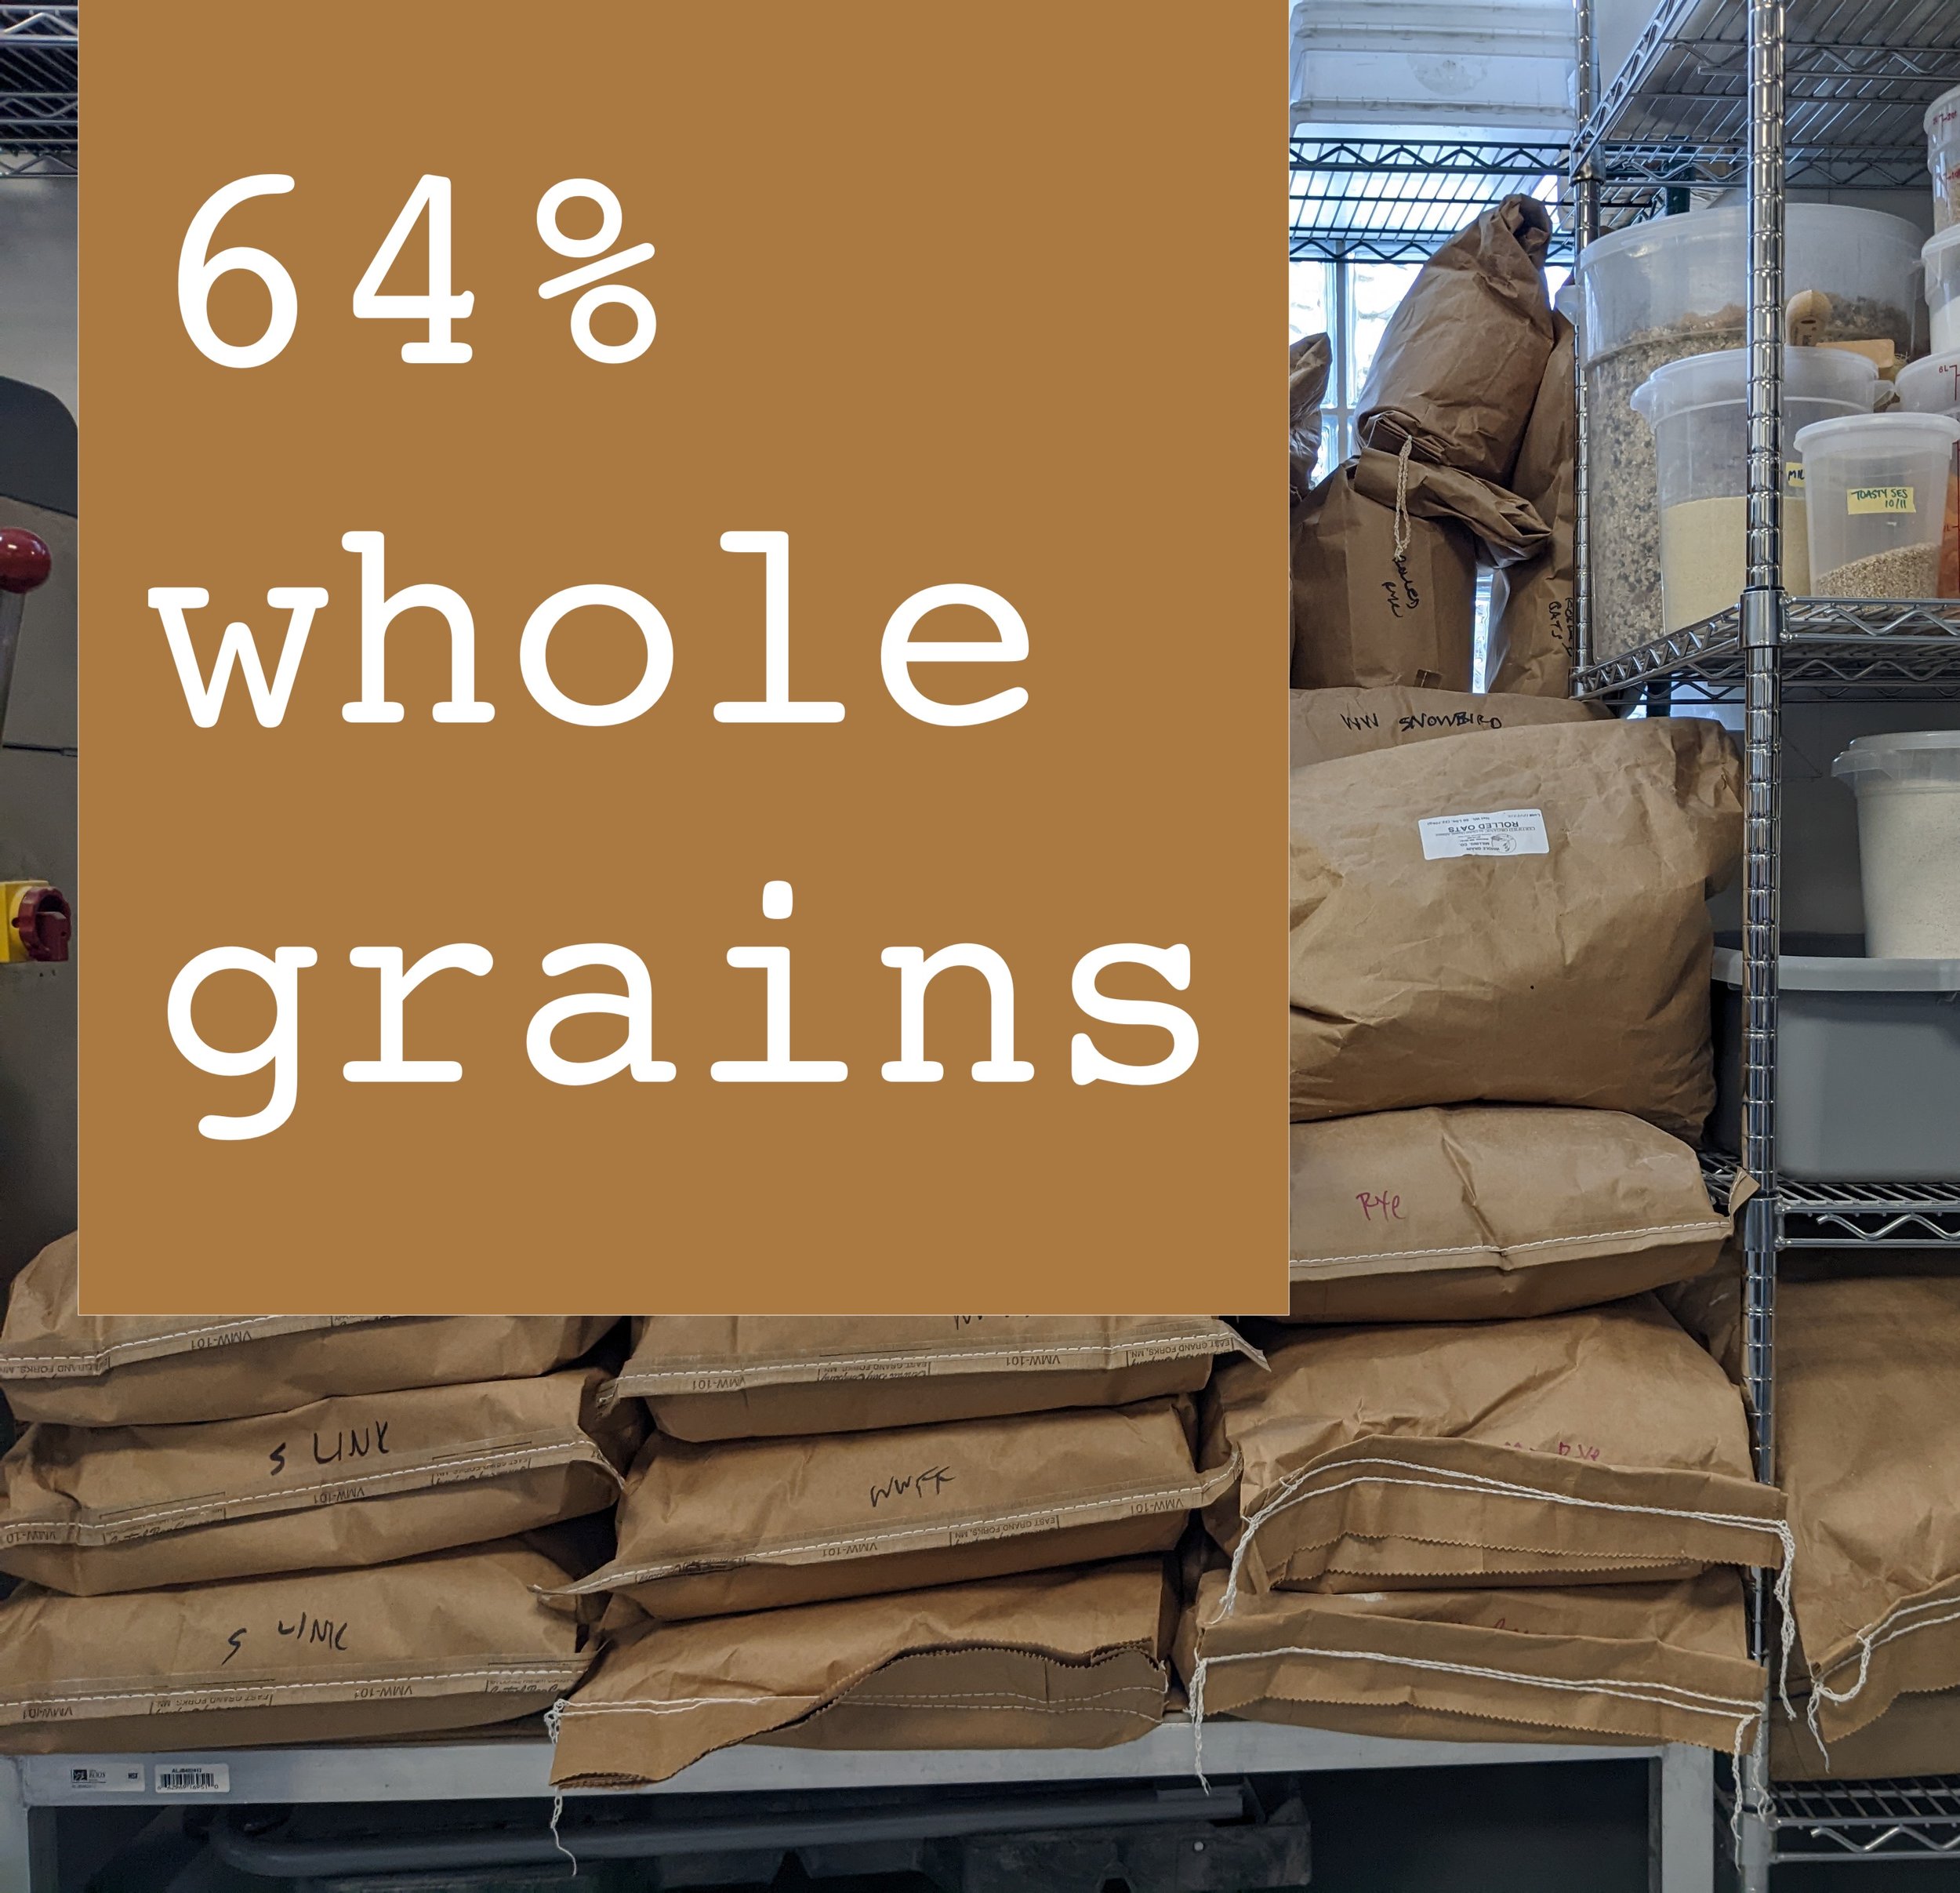  whole grain oriented bakery - 64% whole grains 